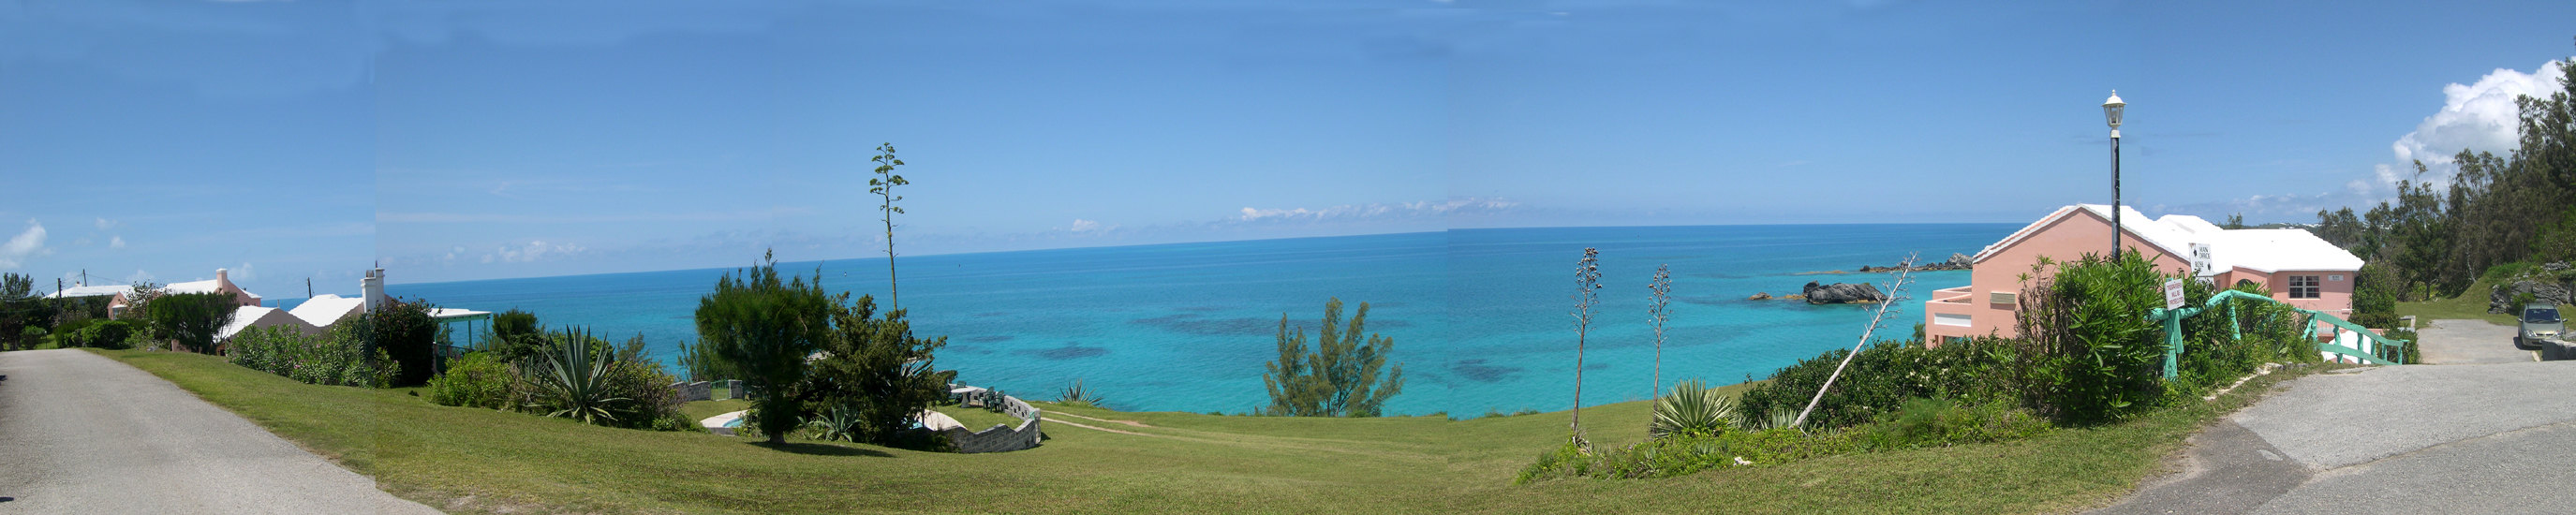 Bermuda - view from hotel - panorama